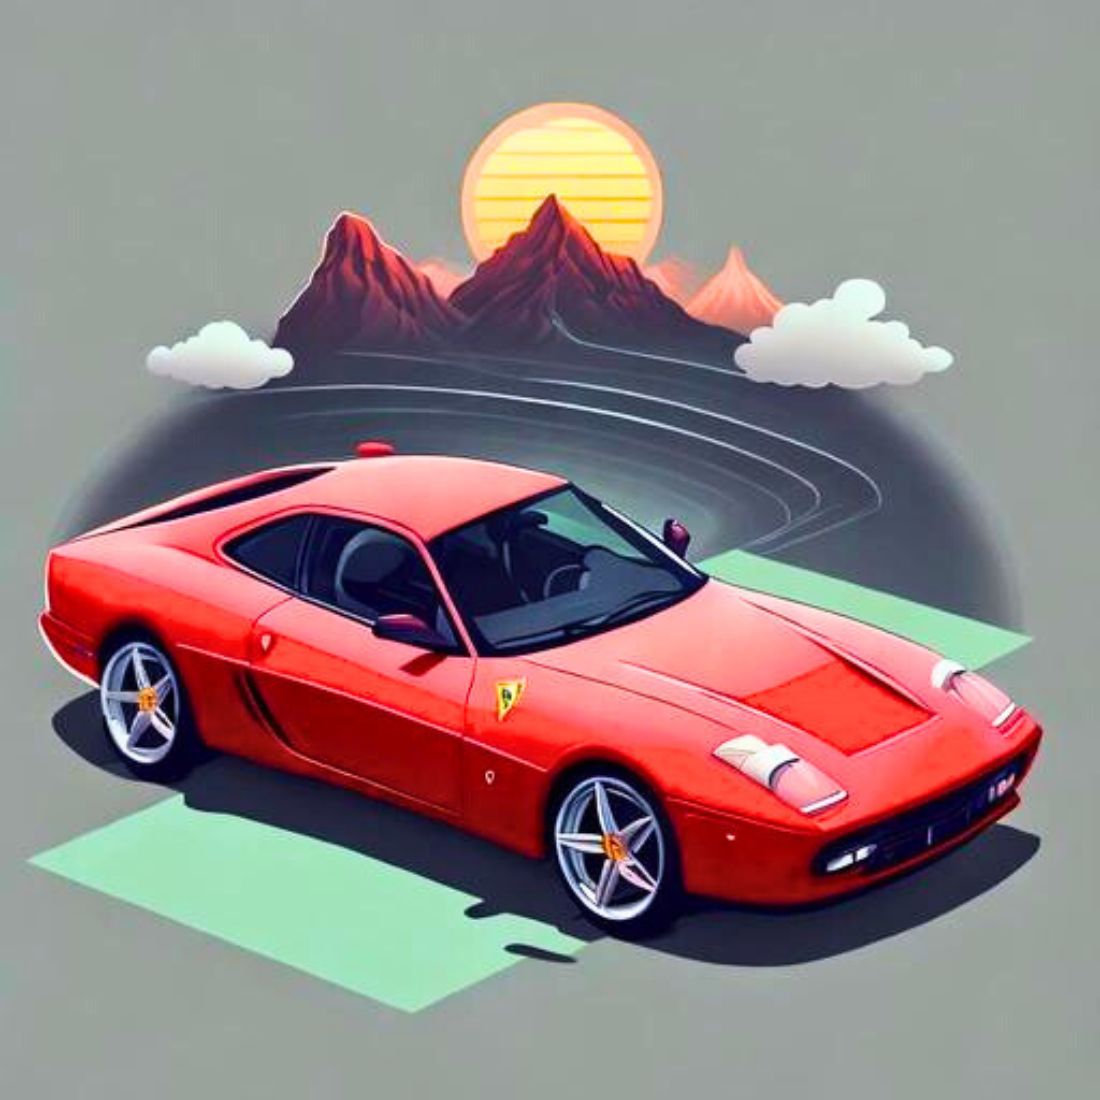 T-Shirt Ferrari design high detailed preview image.